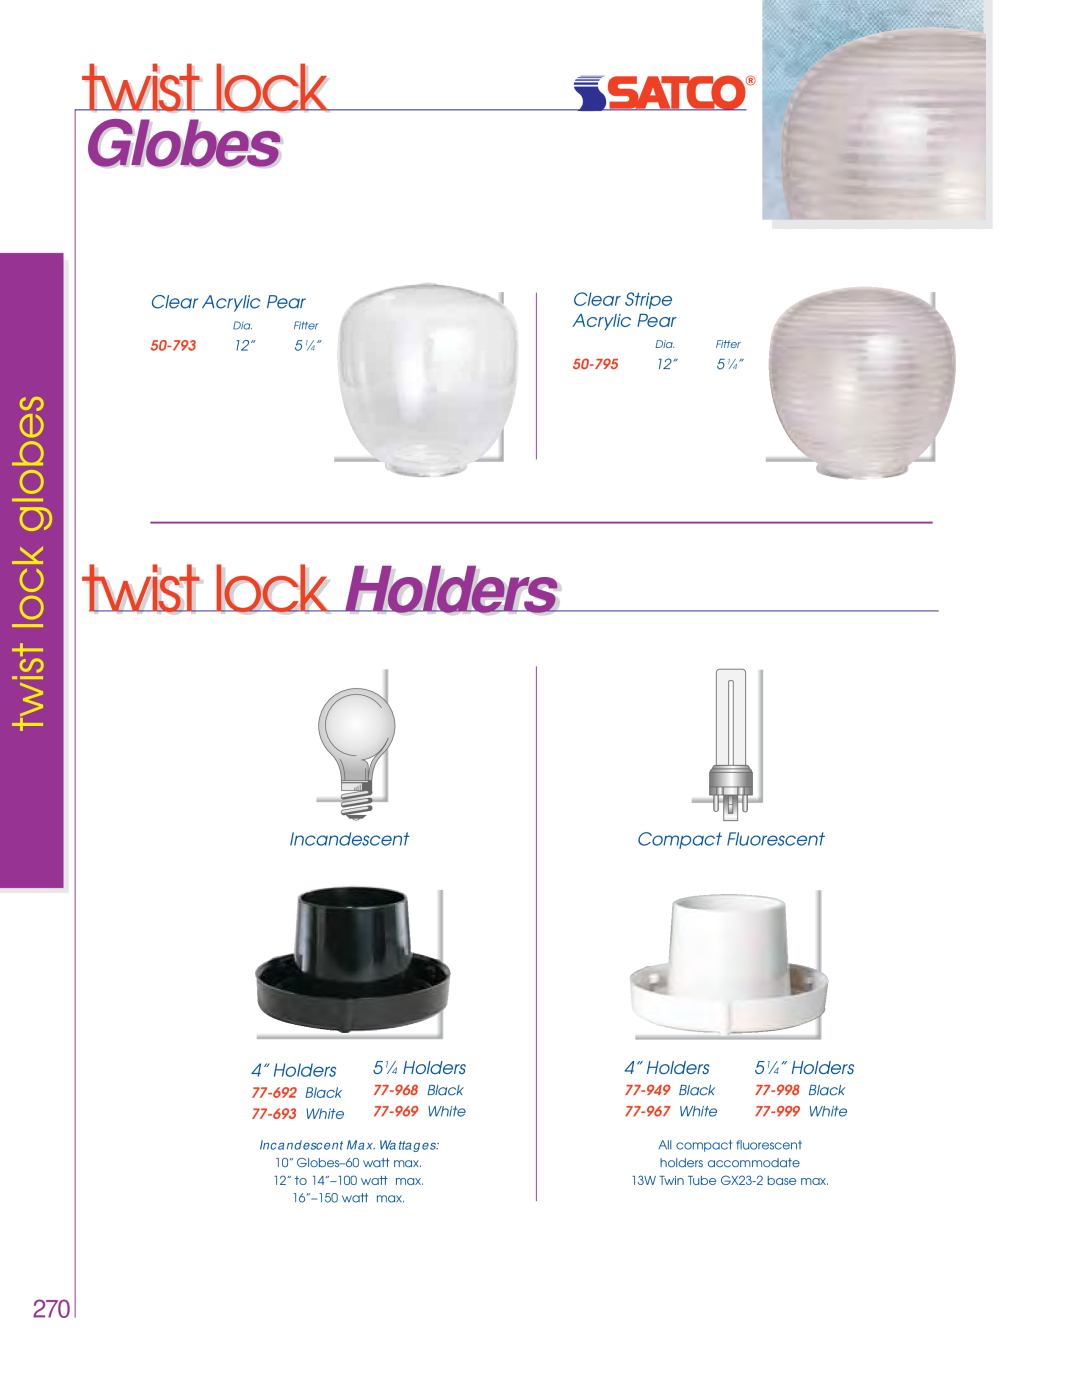 Satco Products 76-693 twist lock, twisti lockl Holders, Clear Acrylic Pear, Clear Stripe Acrylic Pear, Incandescent, Black 